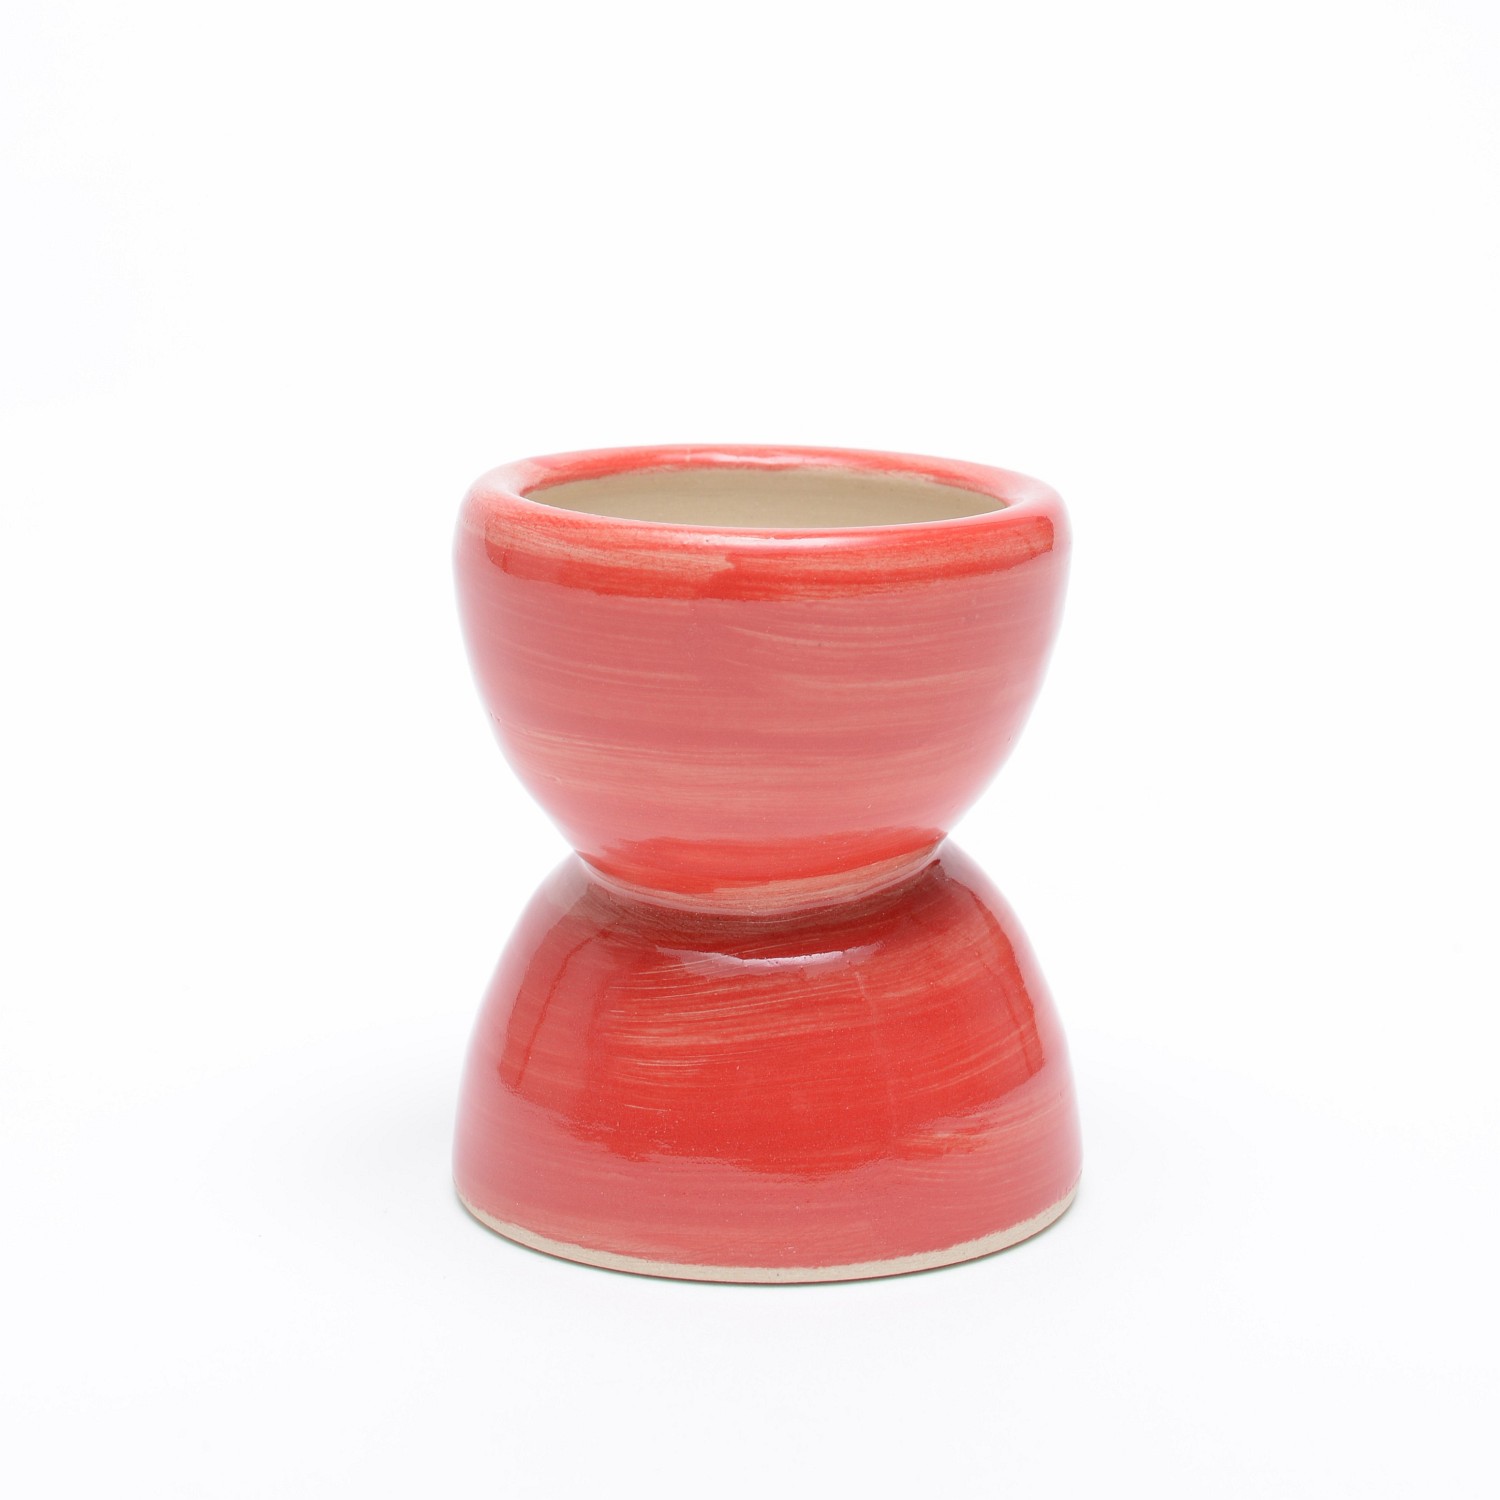 Eierbecher aus Keramik, rot